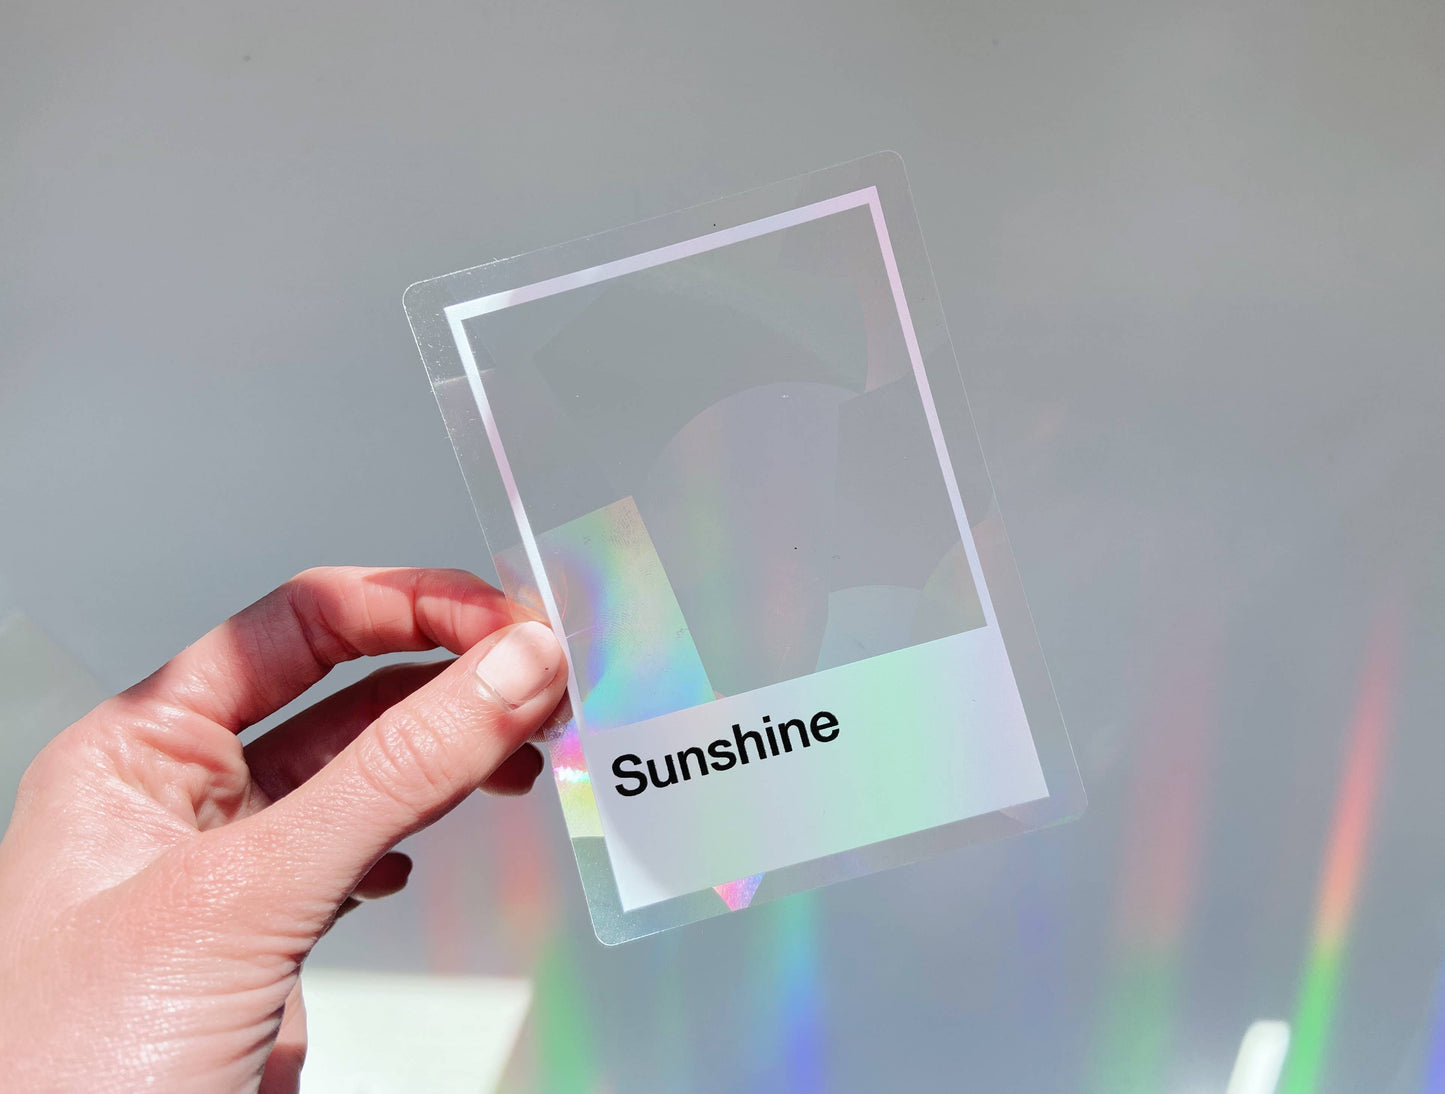 Ten By Ten - Sunshine Suncatcher Sticker: Mini